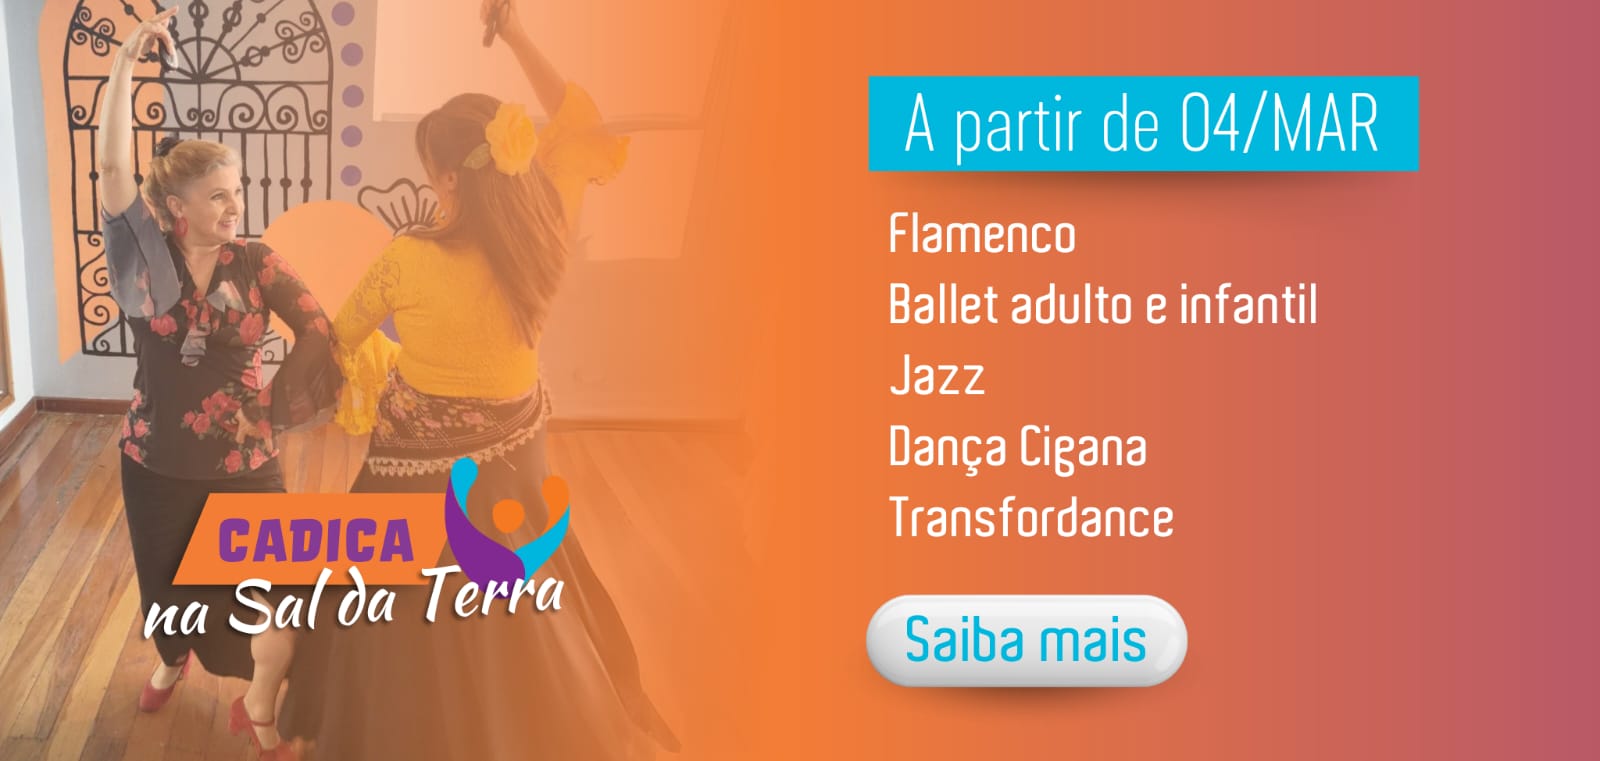 cadica: Jazz, Adulto, Jazz infantil,  Ballet adulto, ballet infantil,, flamenco, dança cigana, transfordance